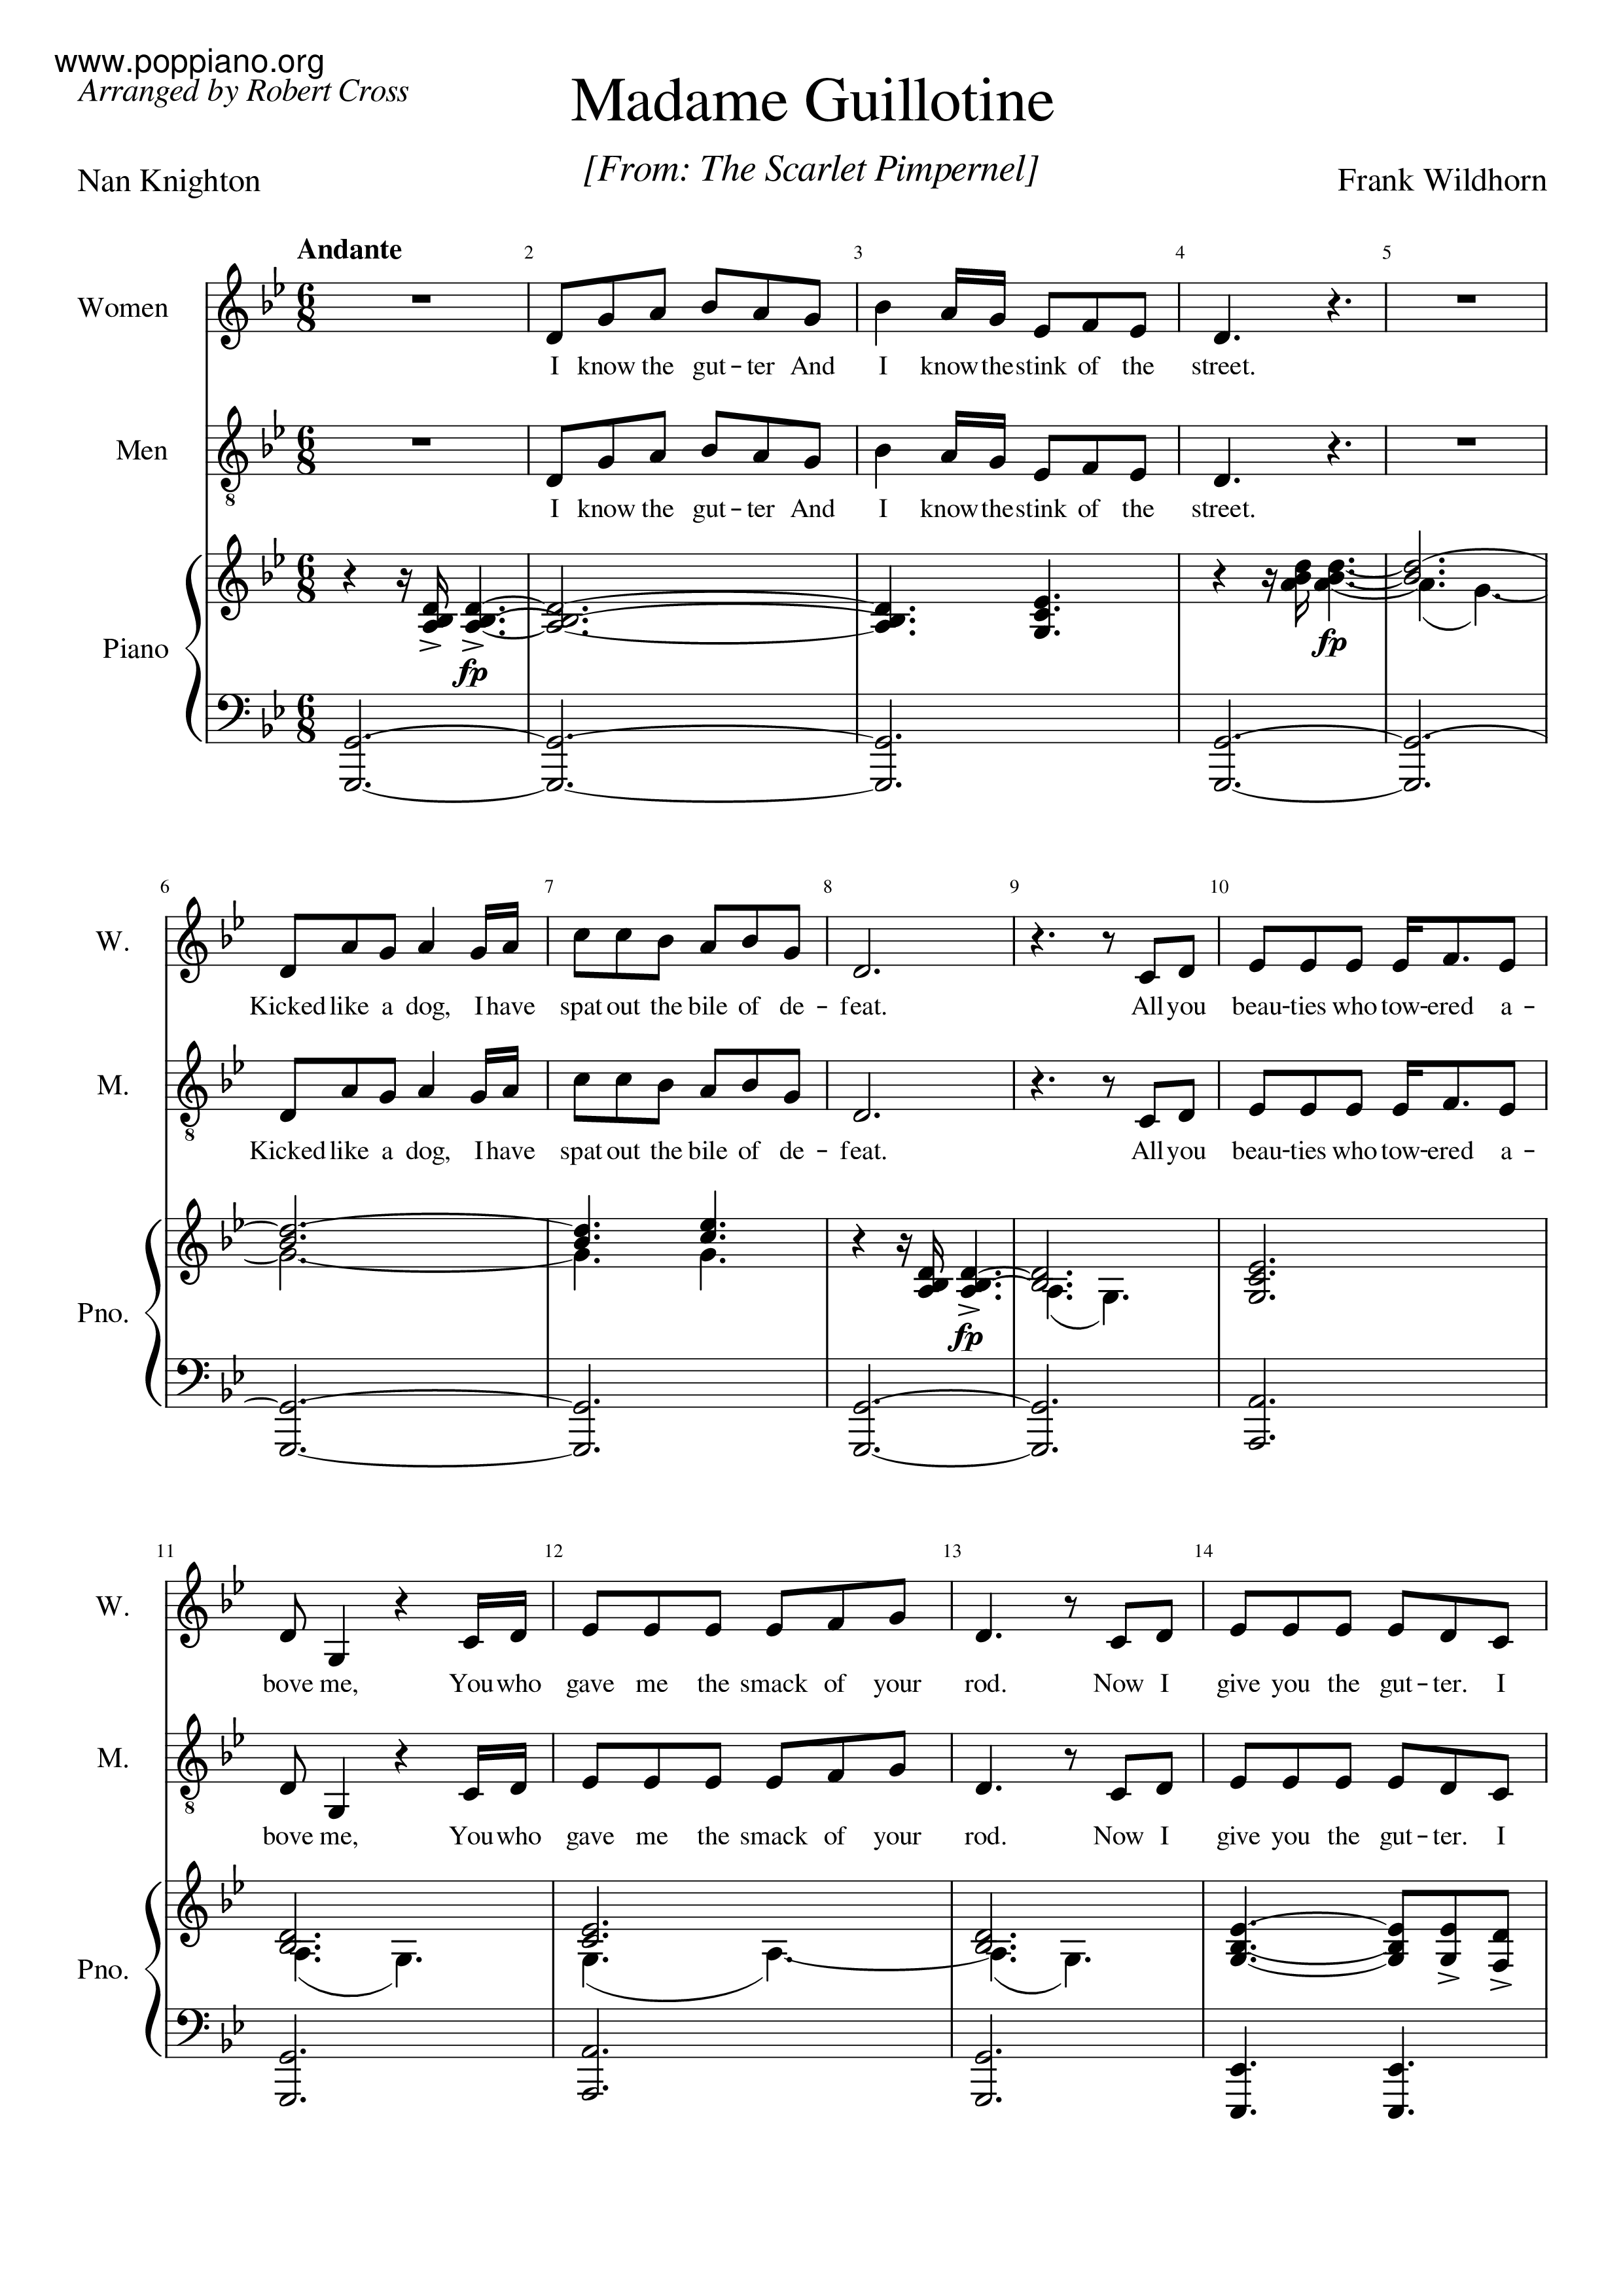 The Scarlet Pimpernel - Madame Guillotine Score